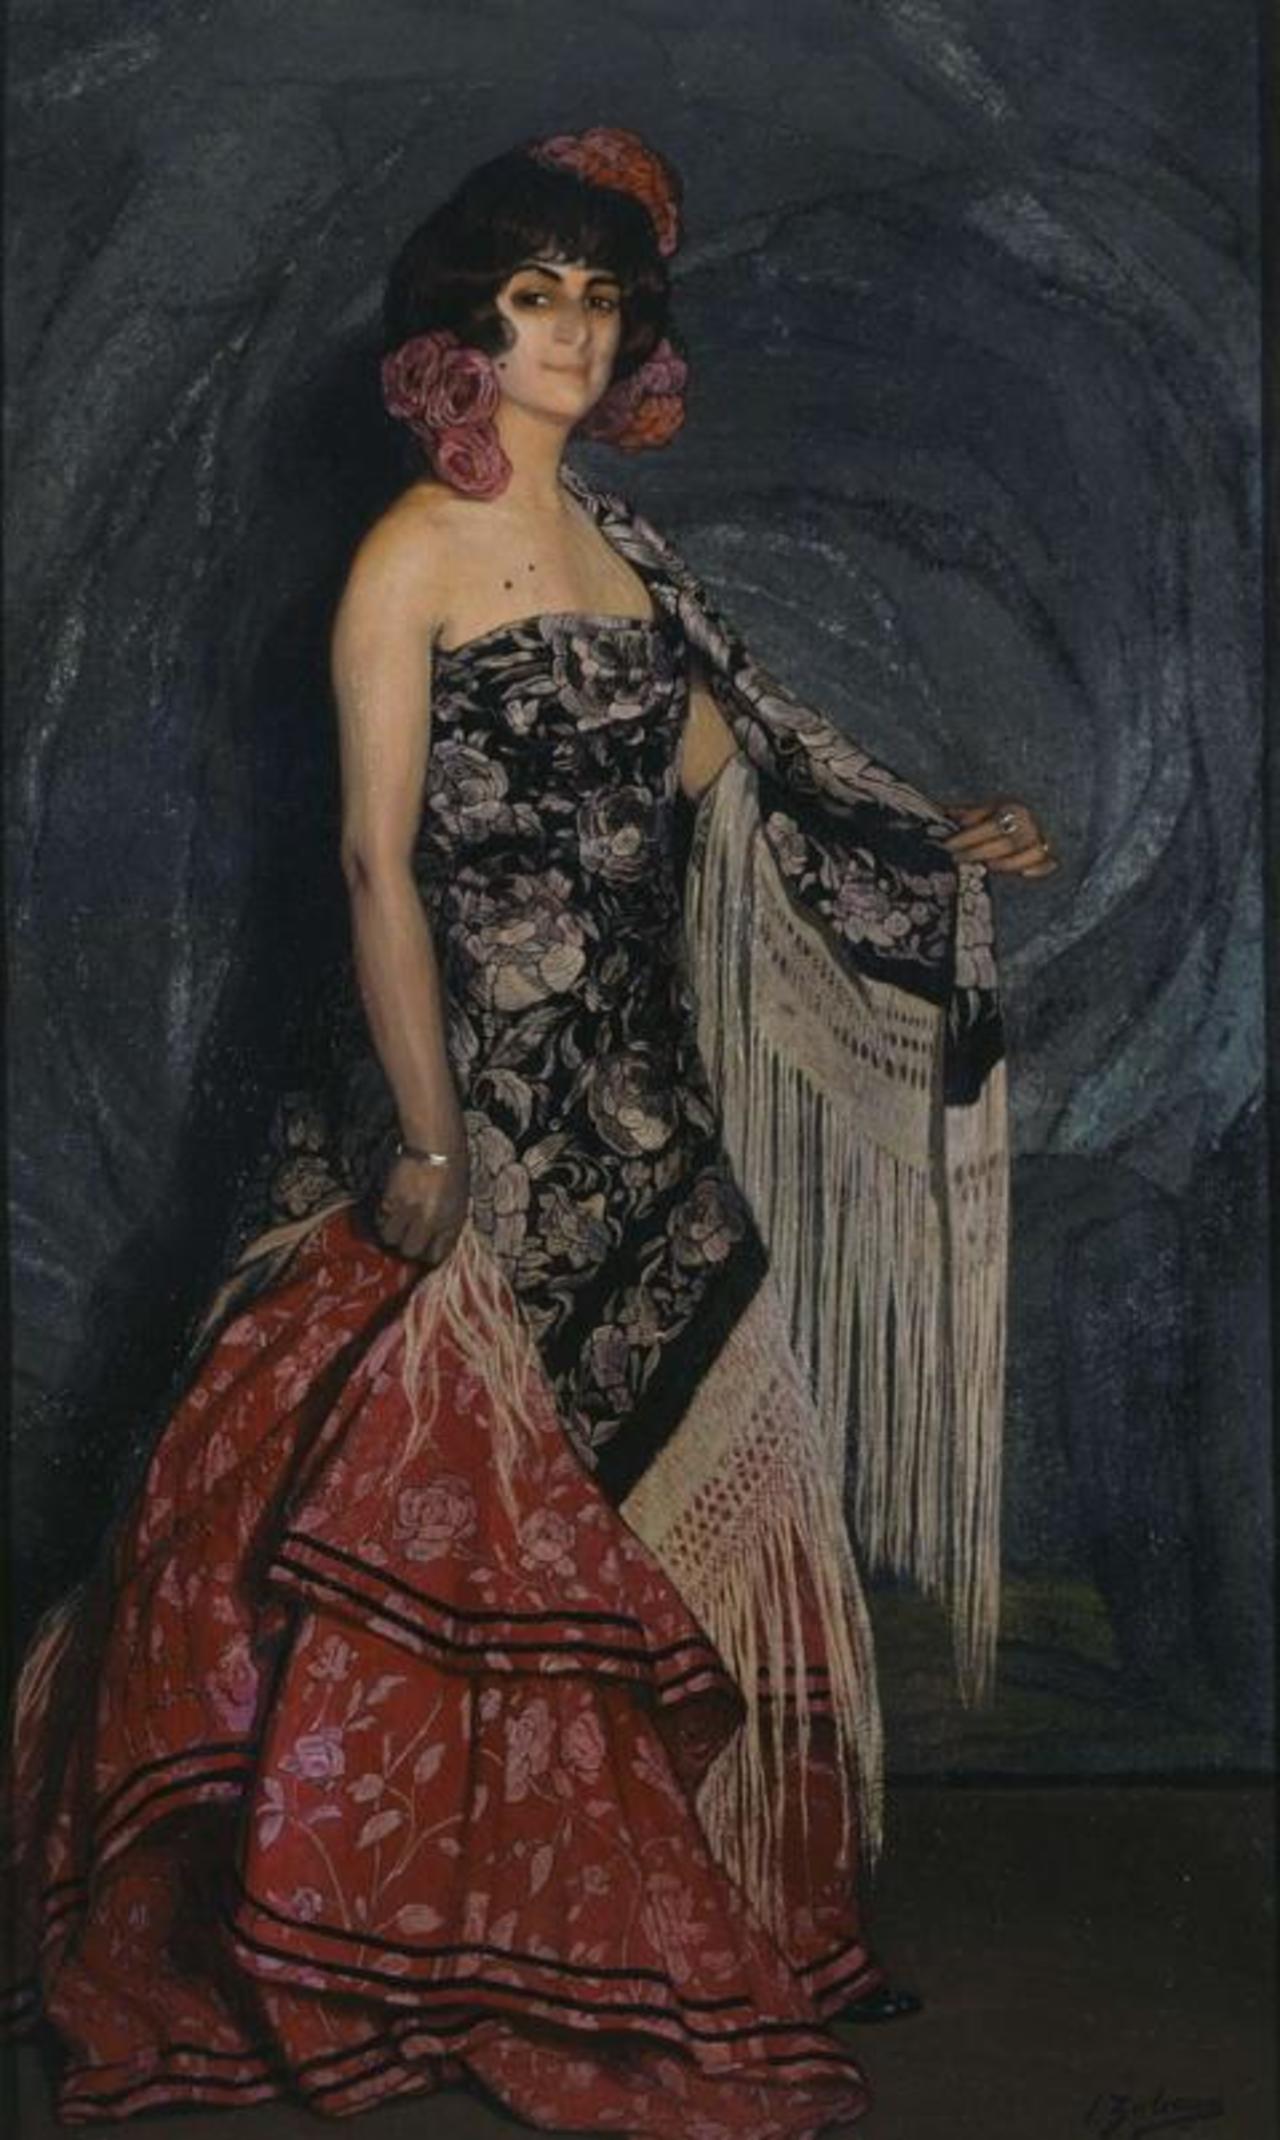 Bailarina. Ignacio #Zuloaga 1912. Museo Reina Sofía, Madrid. #Painting #Portrait #Art #tuitart #followart http://t.co/SSv3b05enm